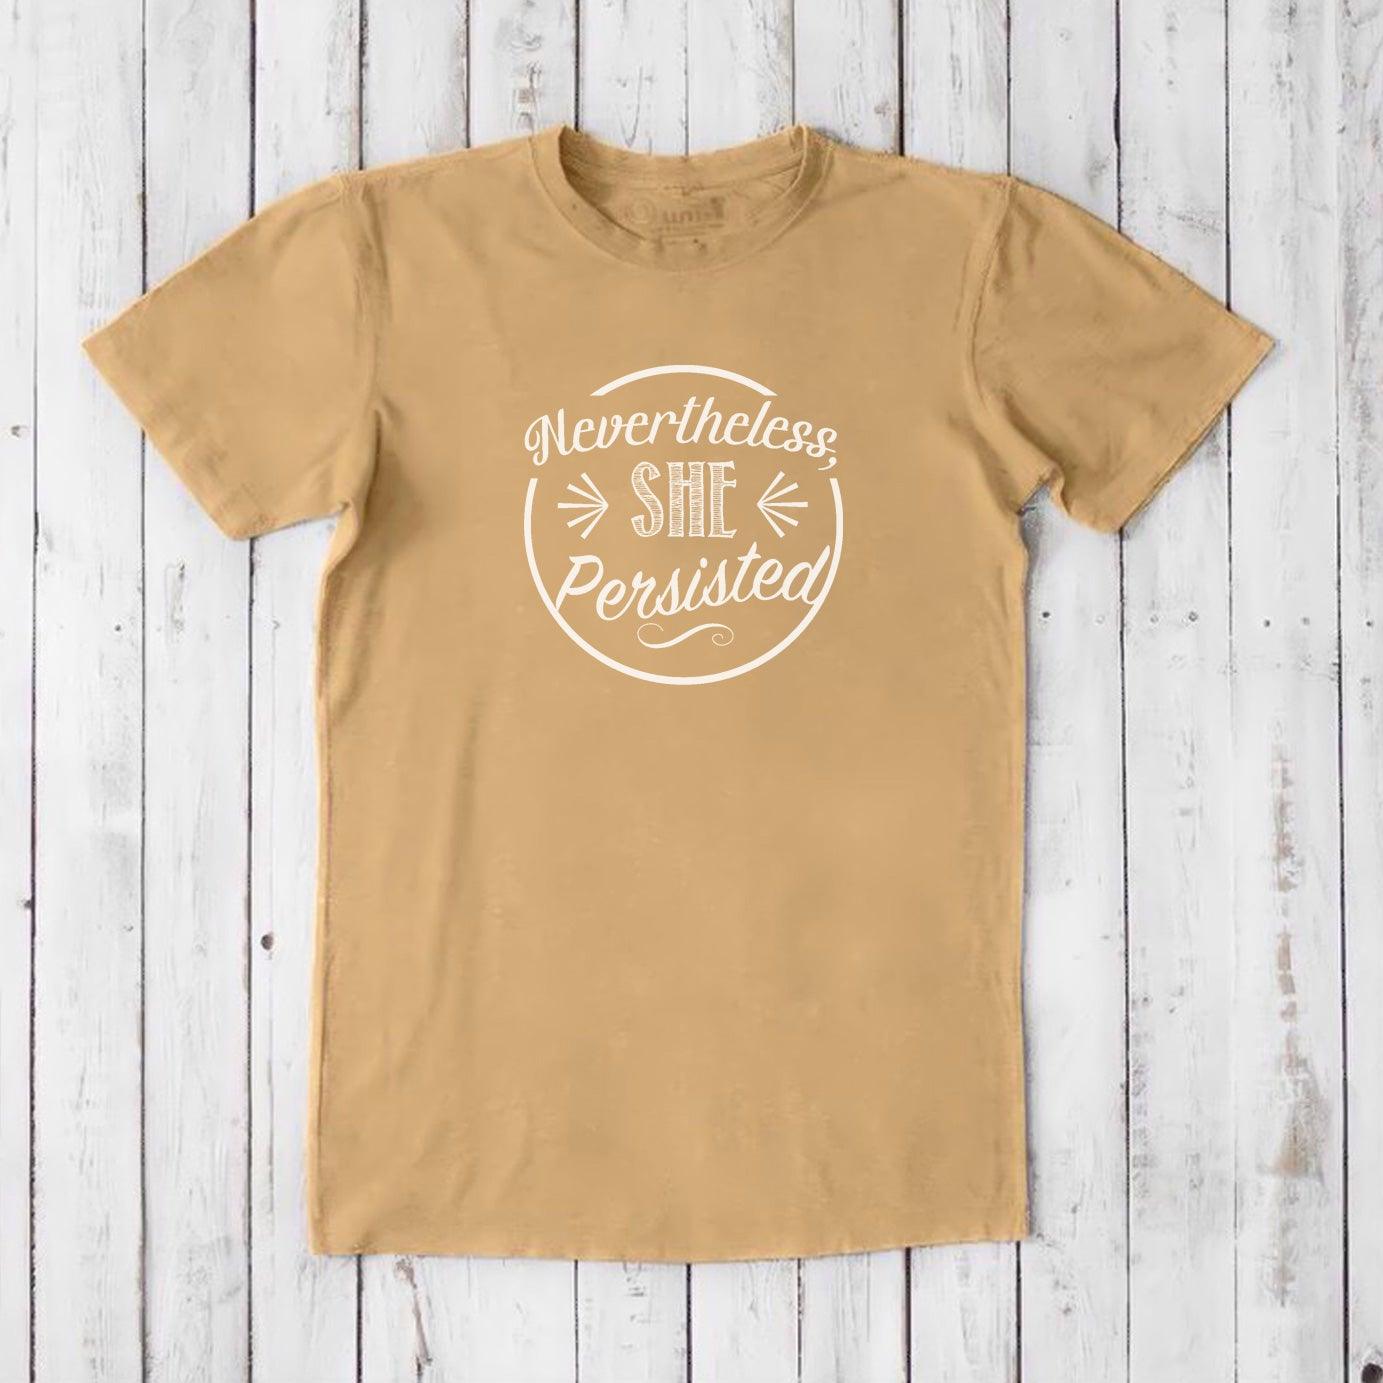 NEVERTHELESS, SHE PERSISTED  T-shirt, Anti Trump Shirt, Feminism T-shirt, Organic Clothing